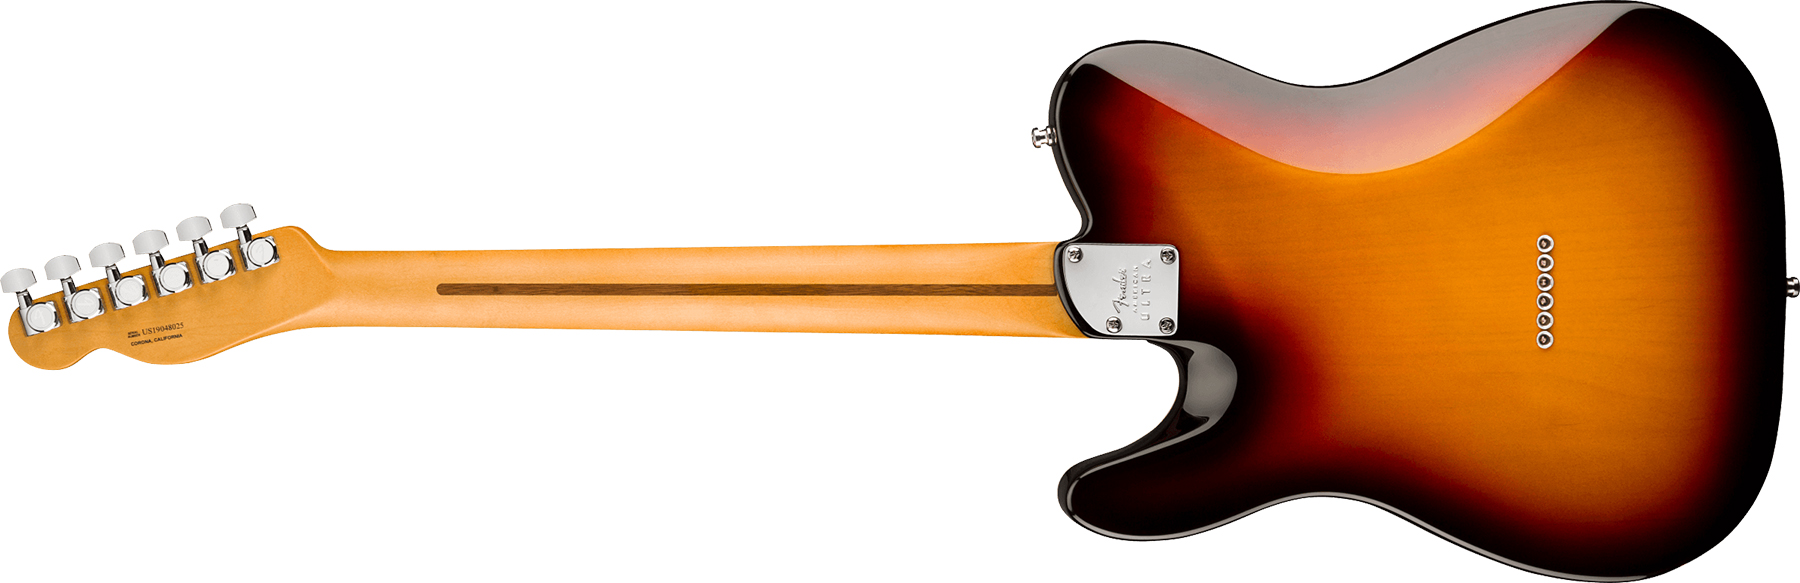 Fender Tele American Ultra 2019 Usa Rw - Ultraburst - Televorm elektrische gitaar - Variation 1